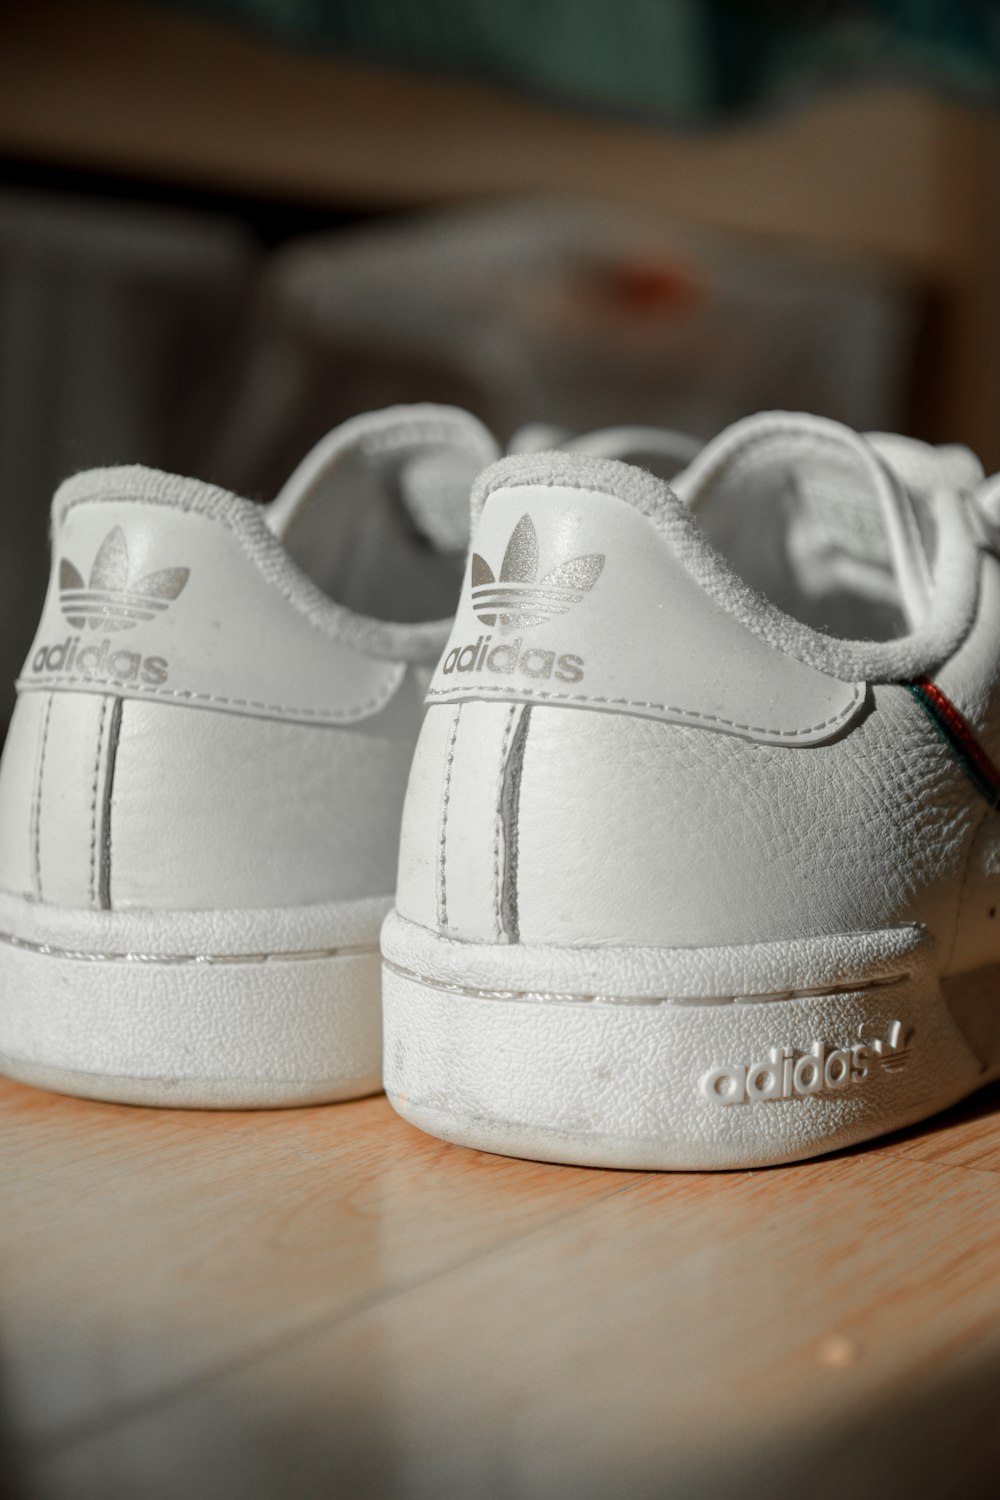 white Adidas low-top sneakers photo – Free Grey Image on Unsplash